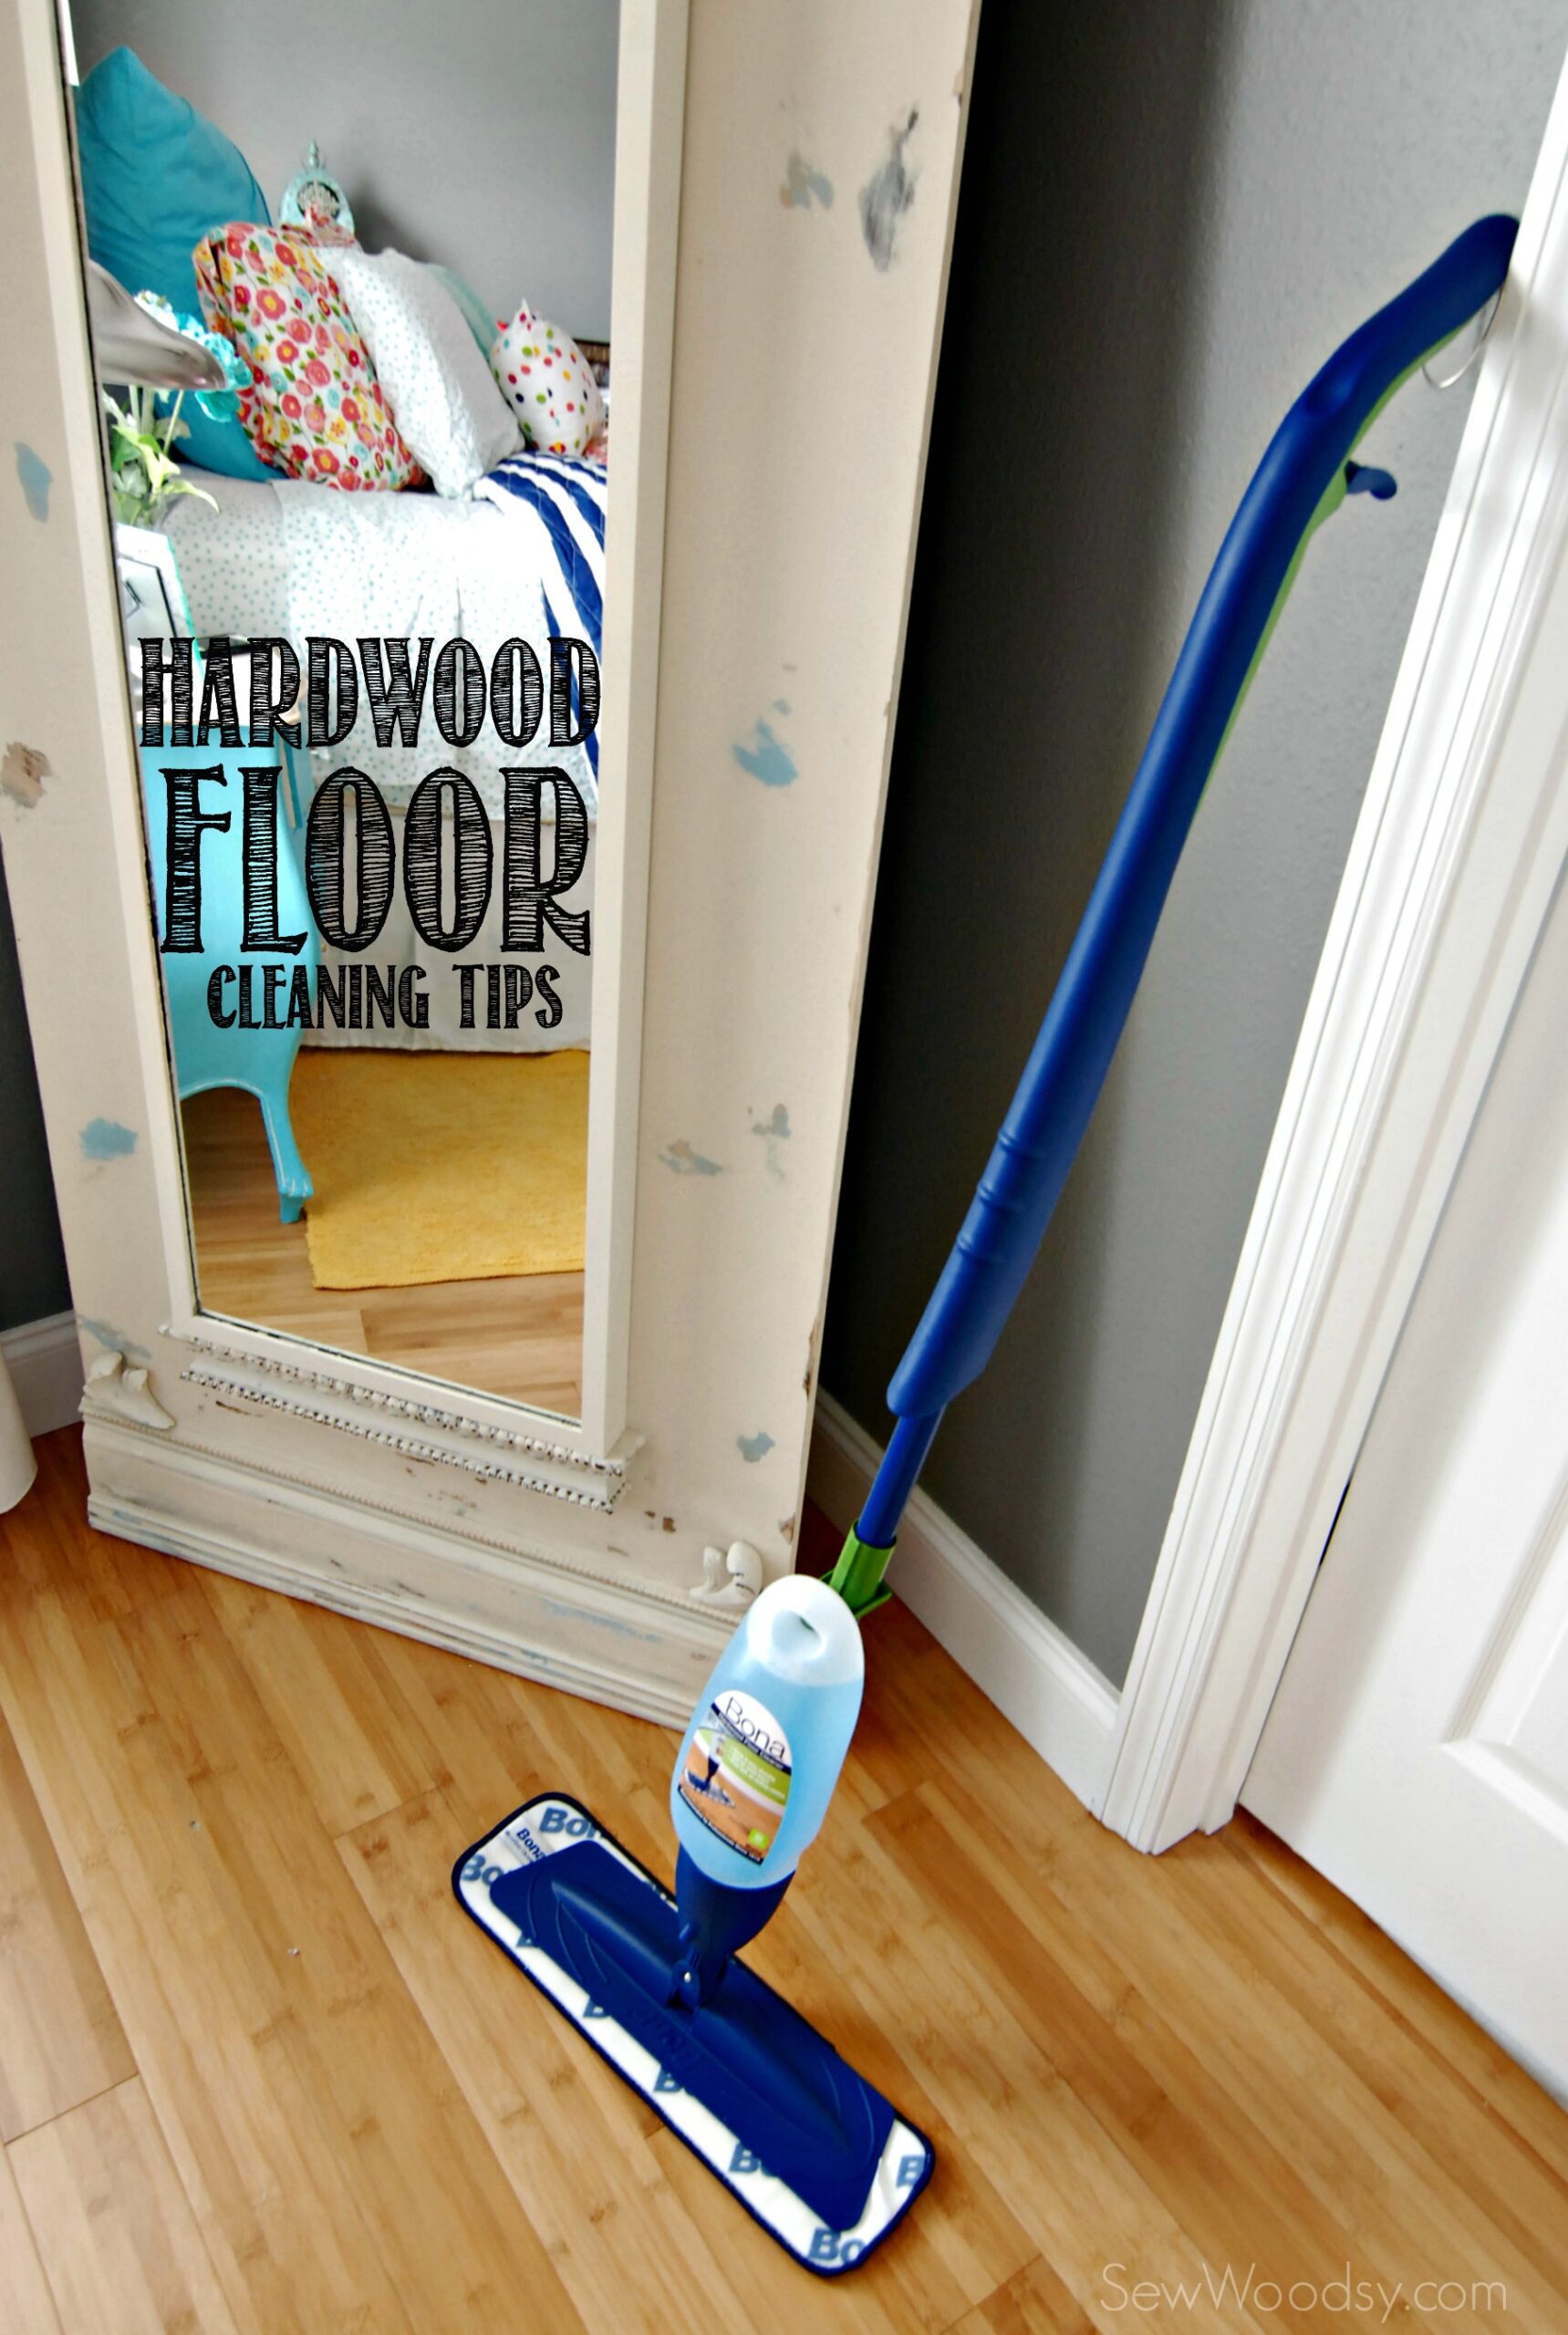 https://sewwoodsy.com/wp-content/uploads/2015/03/Hardwood-Floor-Cleaning-Tips-scaled.jpg